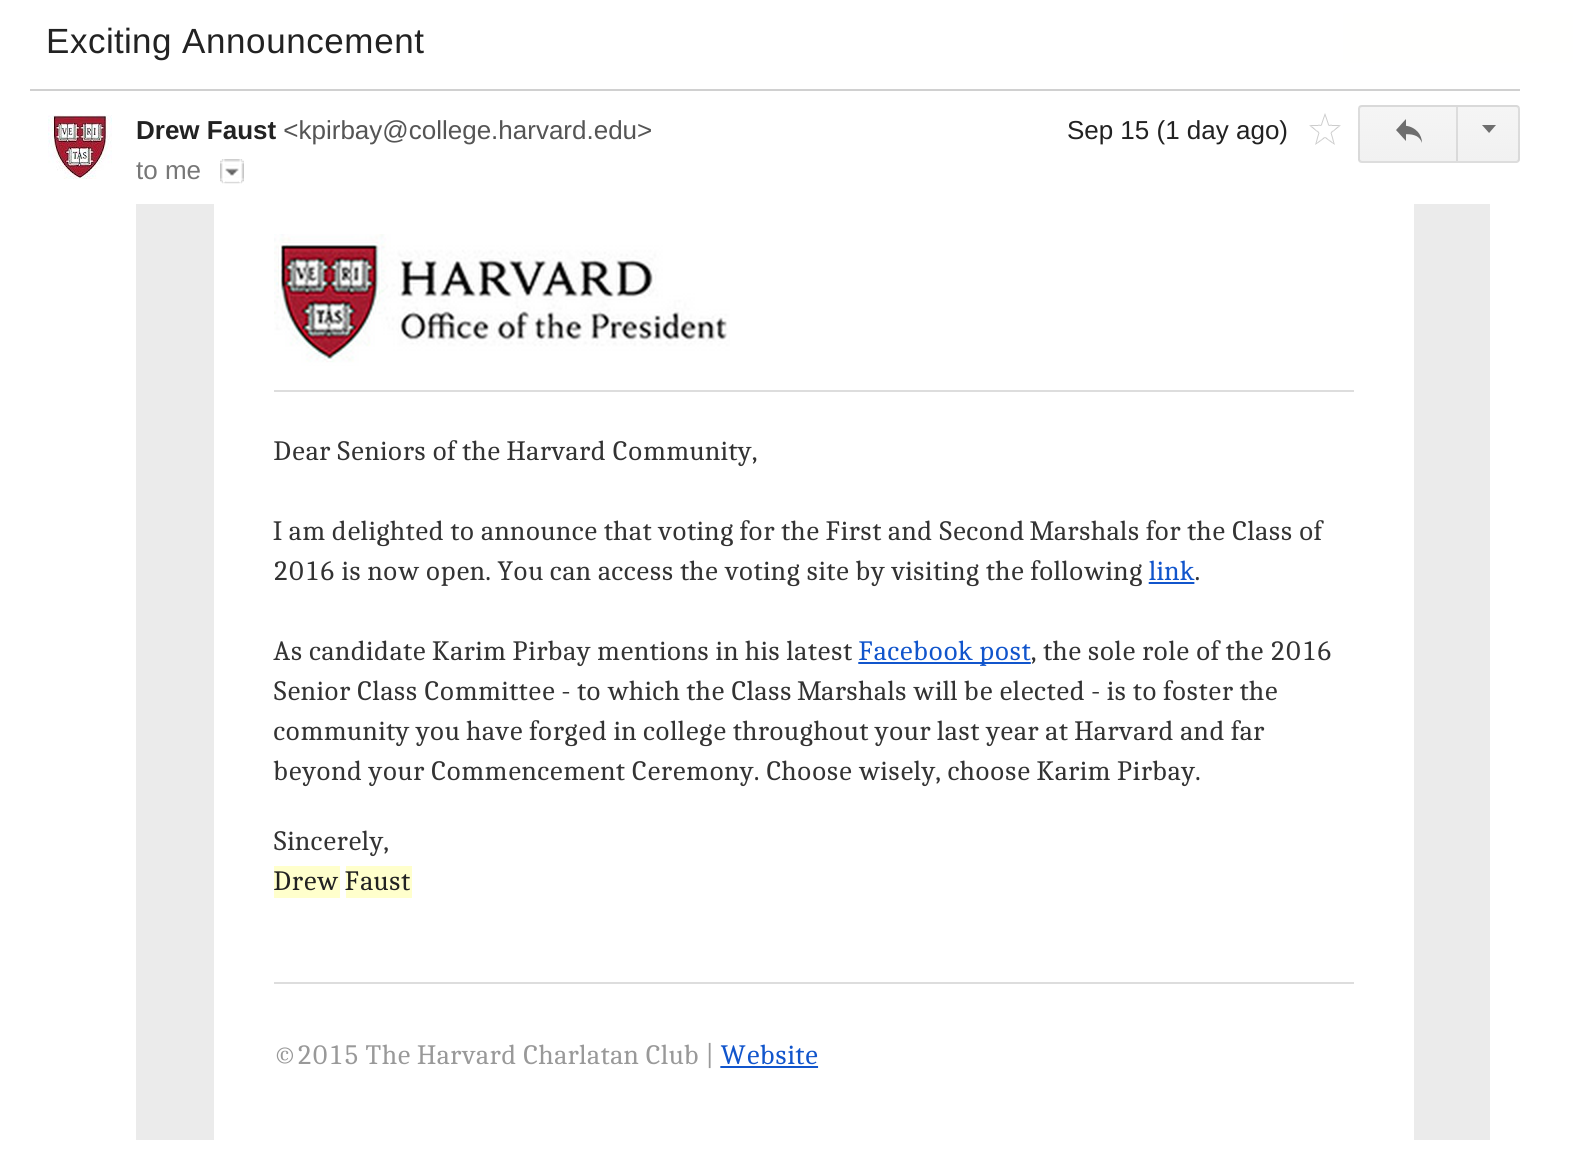 An email from "Drew Faust", encouraging Harvard seniors to vote, endorsing Karim Pirbay.